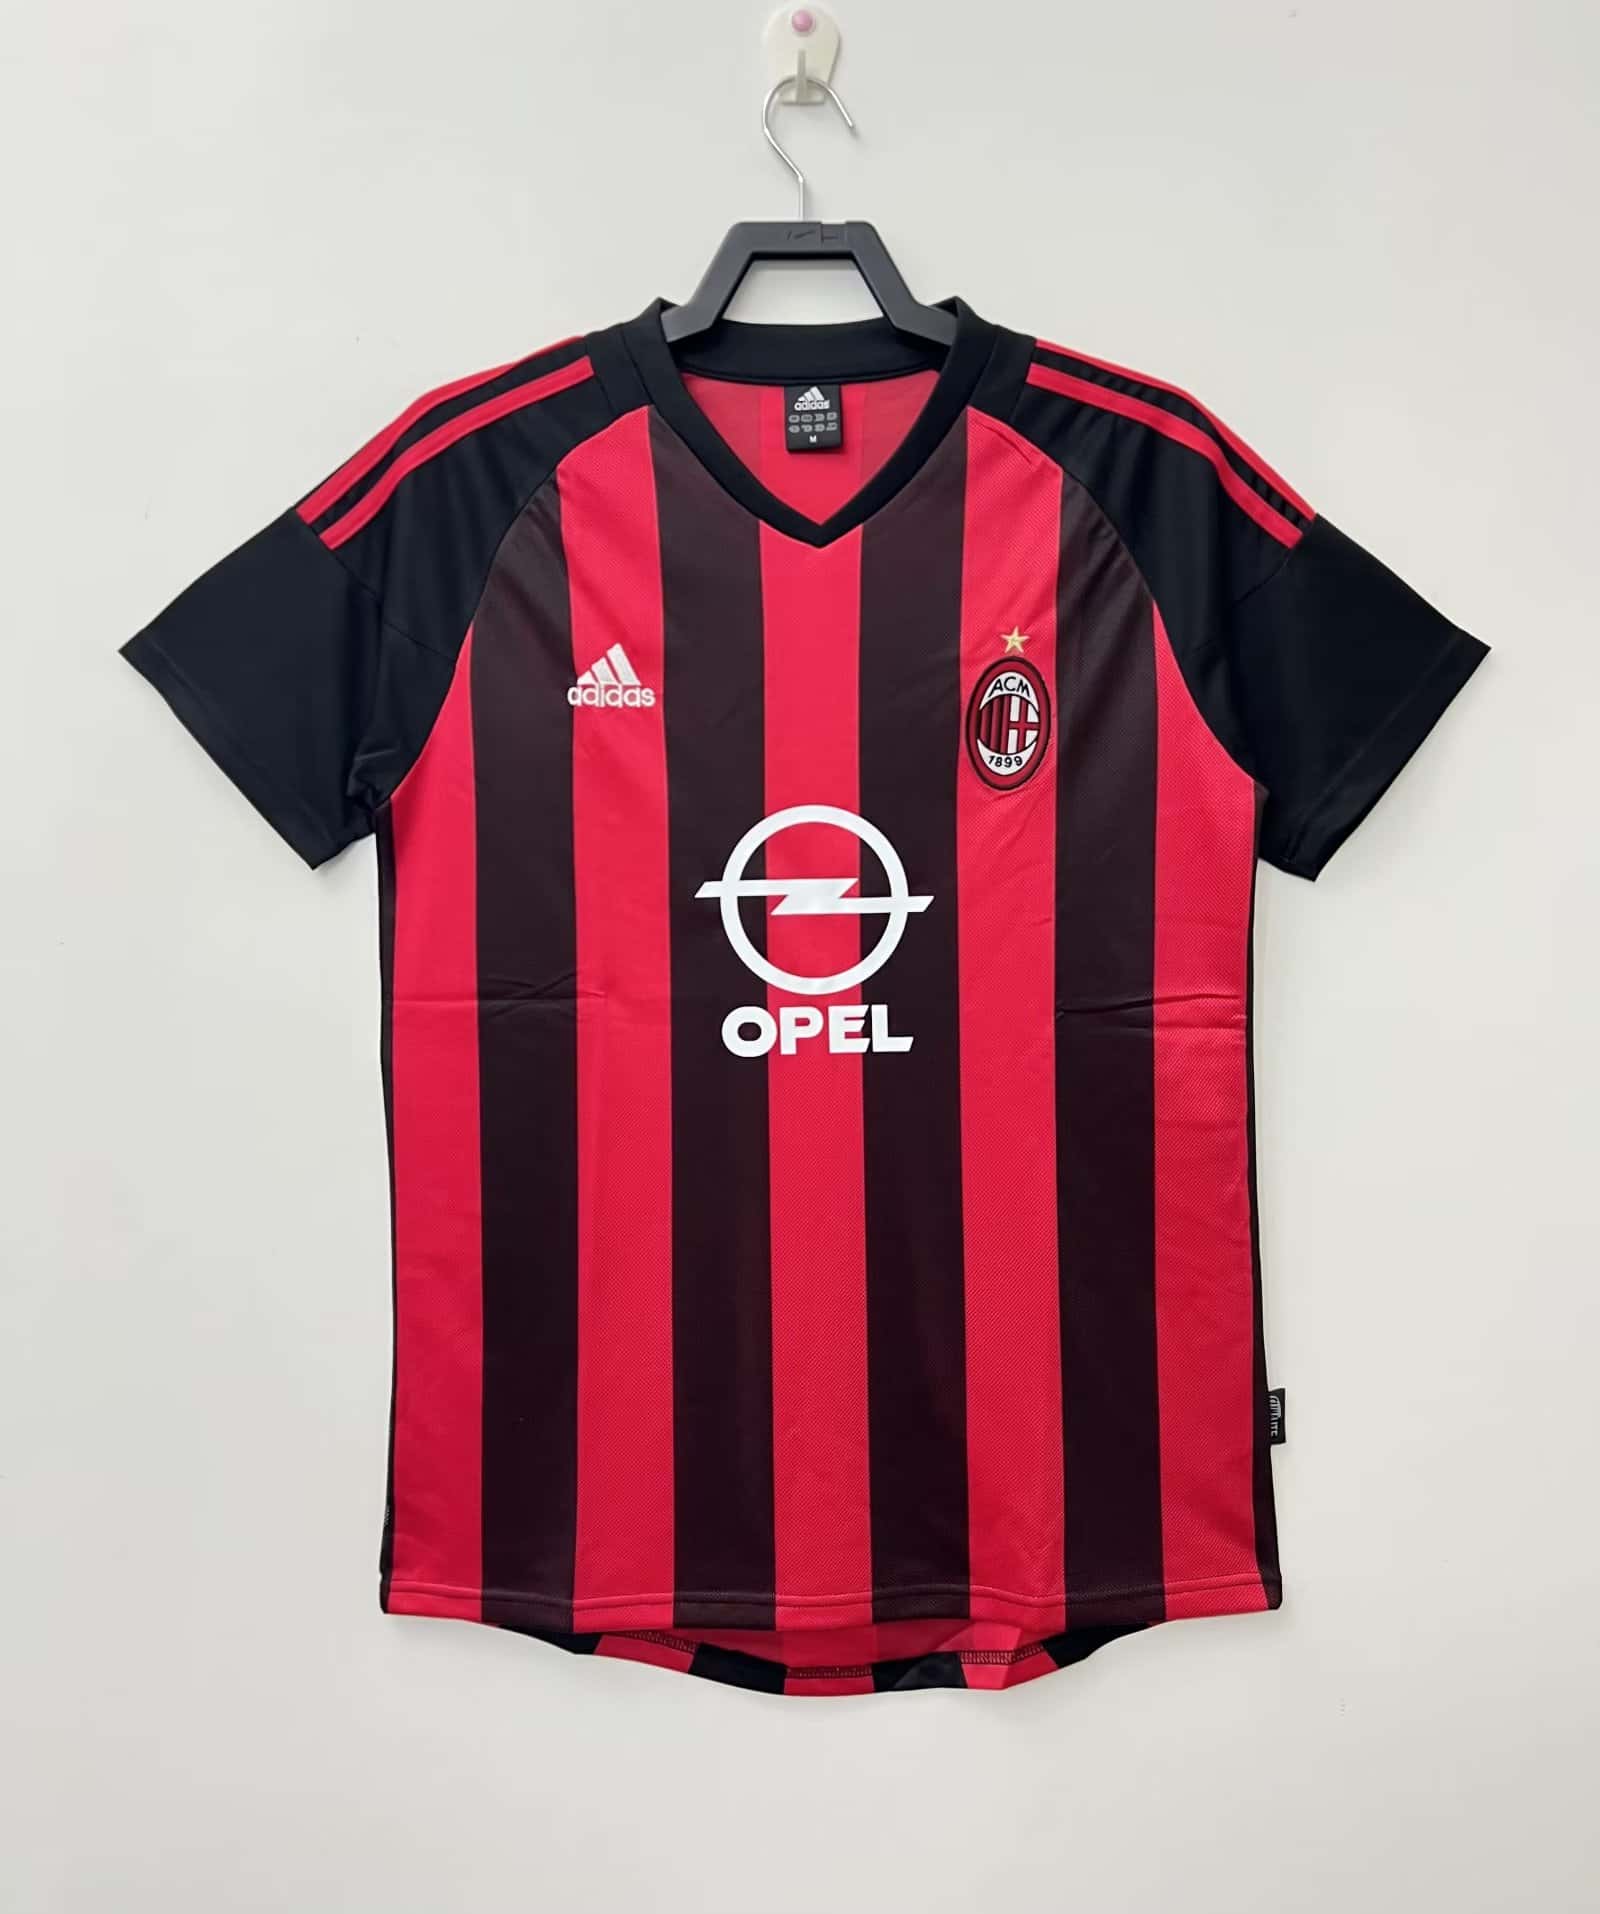 AC Milan Home football shirt 2000 - 2002. Sponsored by Opel